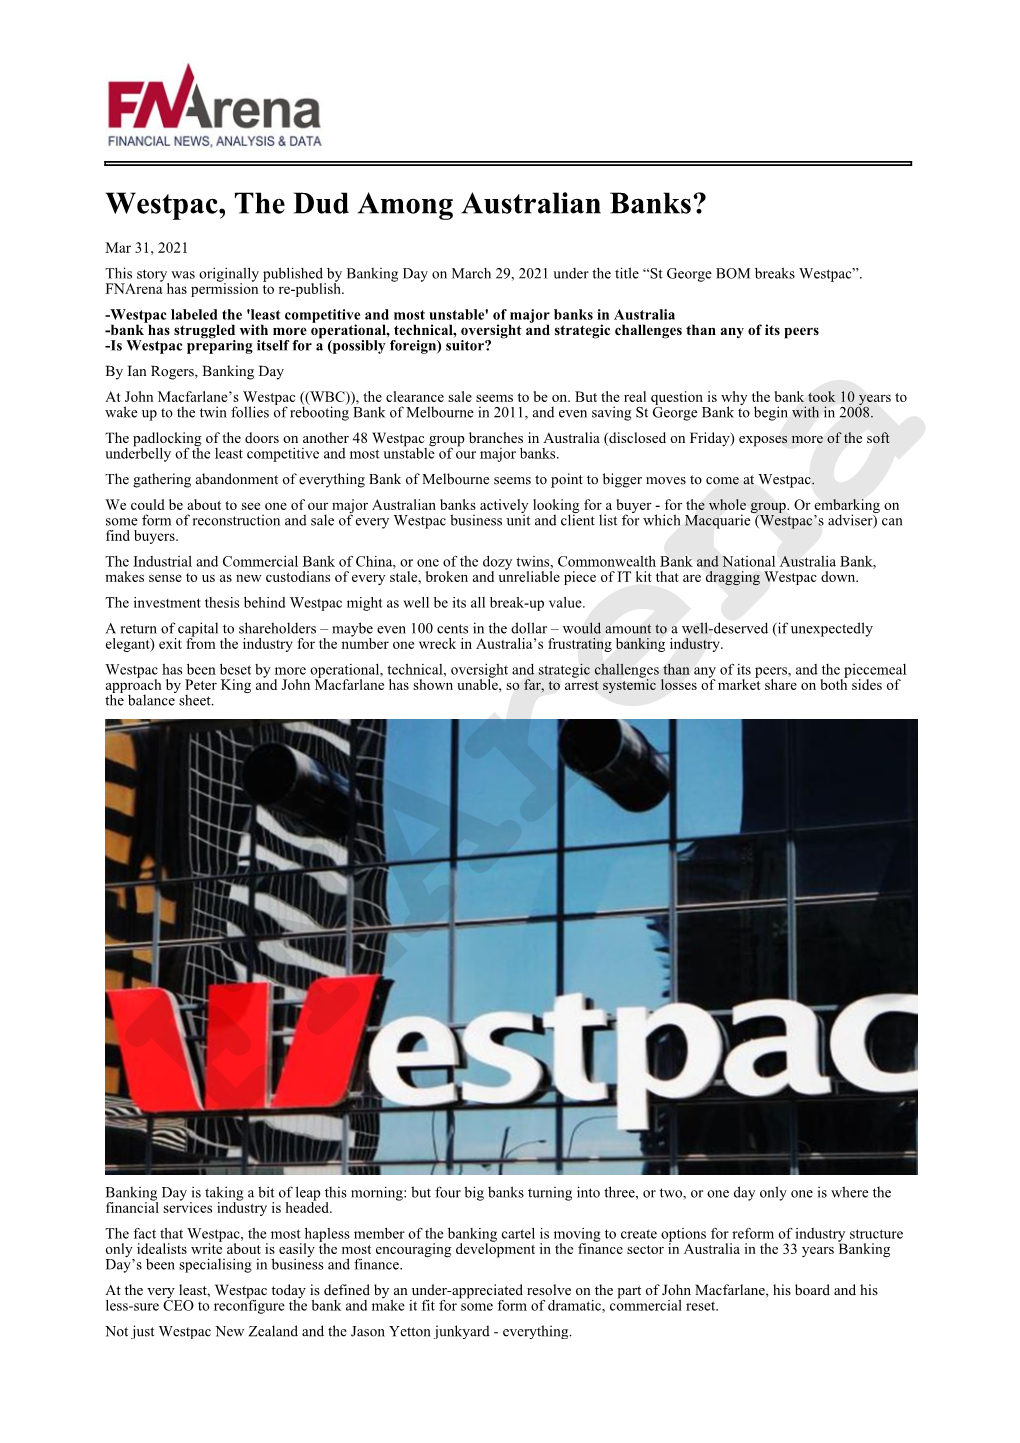 Westpac, the Dud Among Australian Banks?